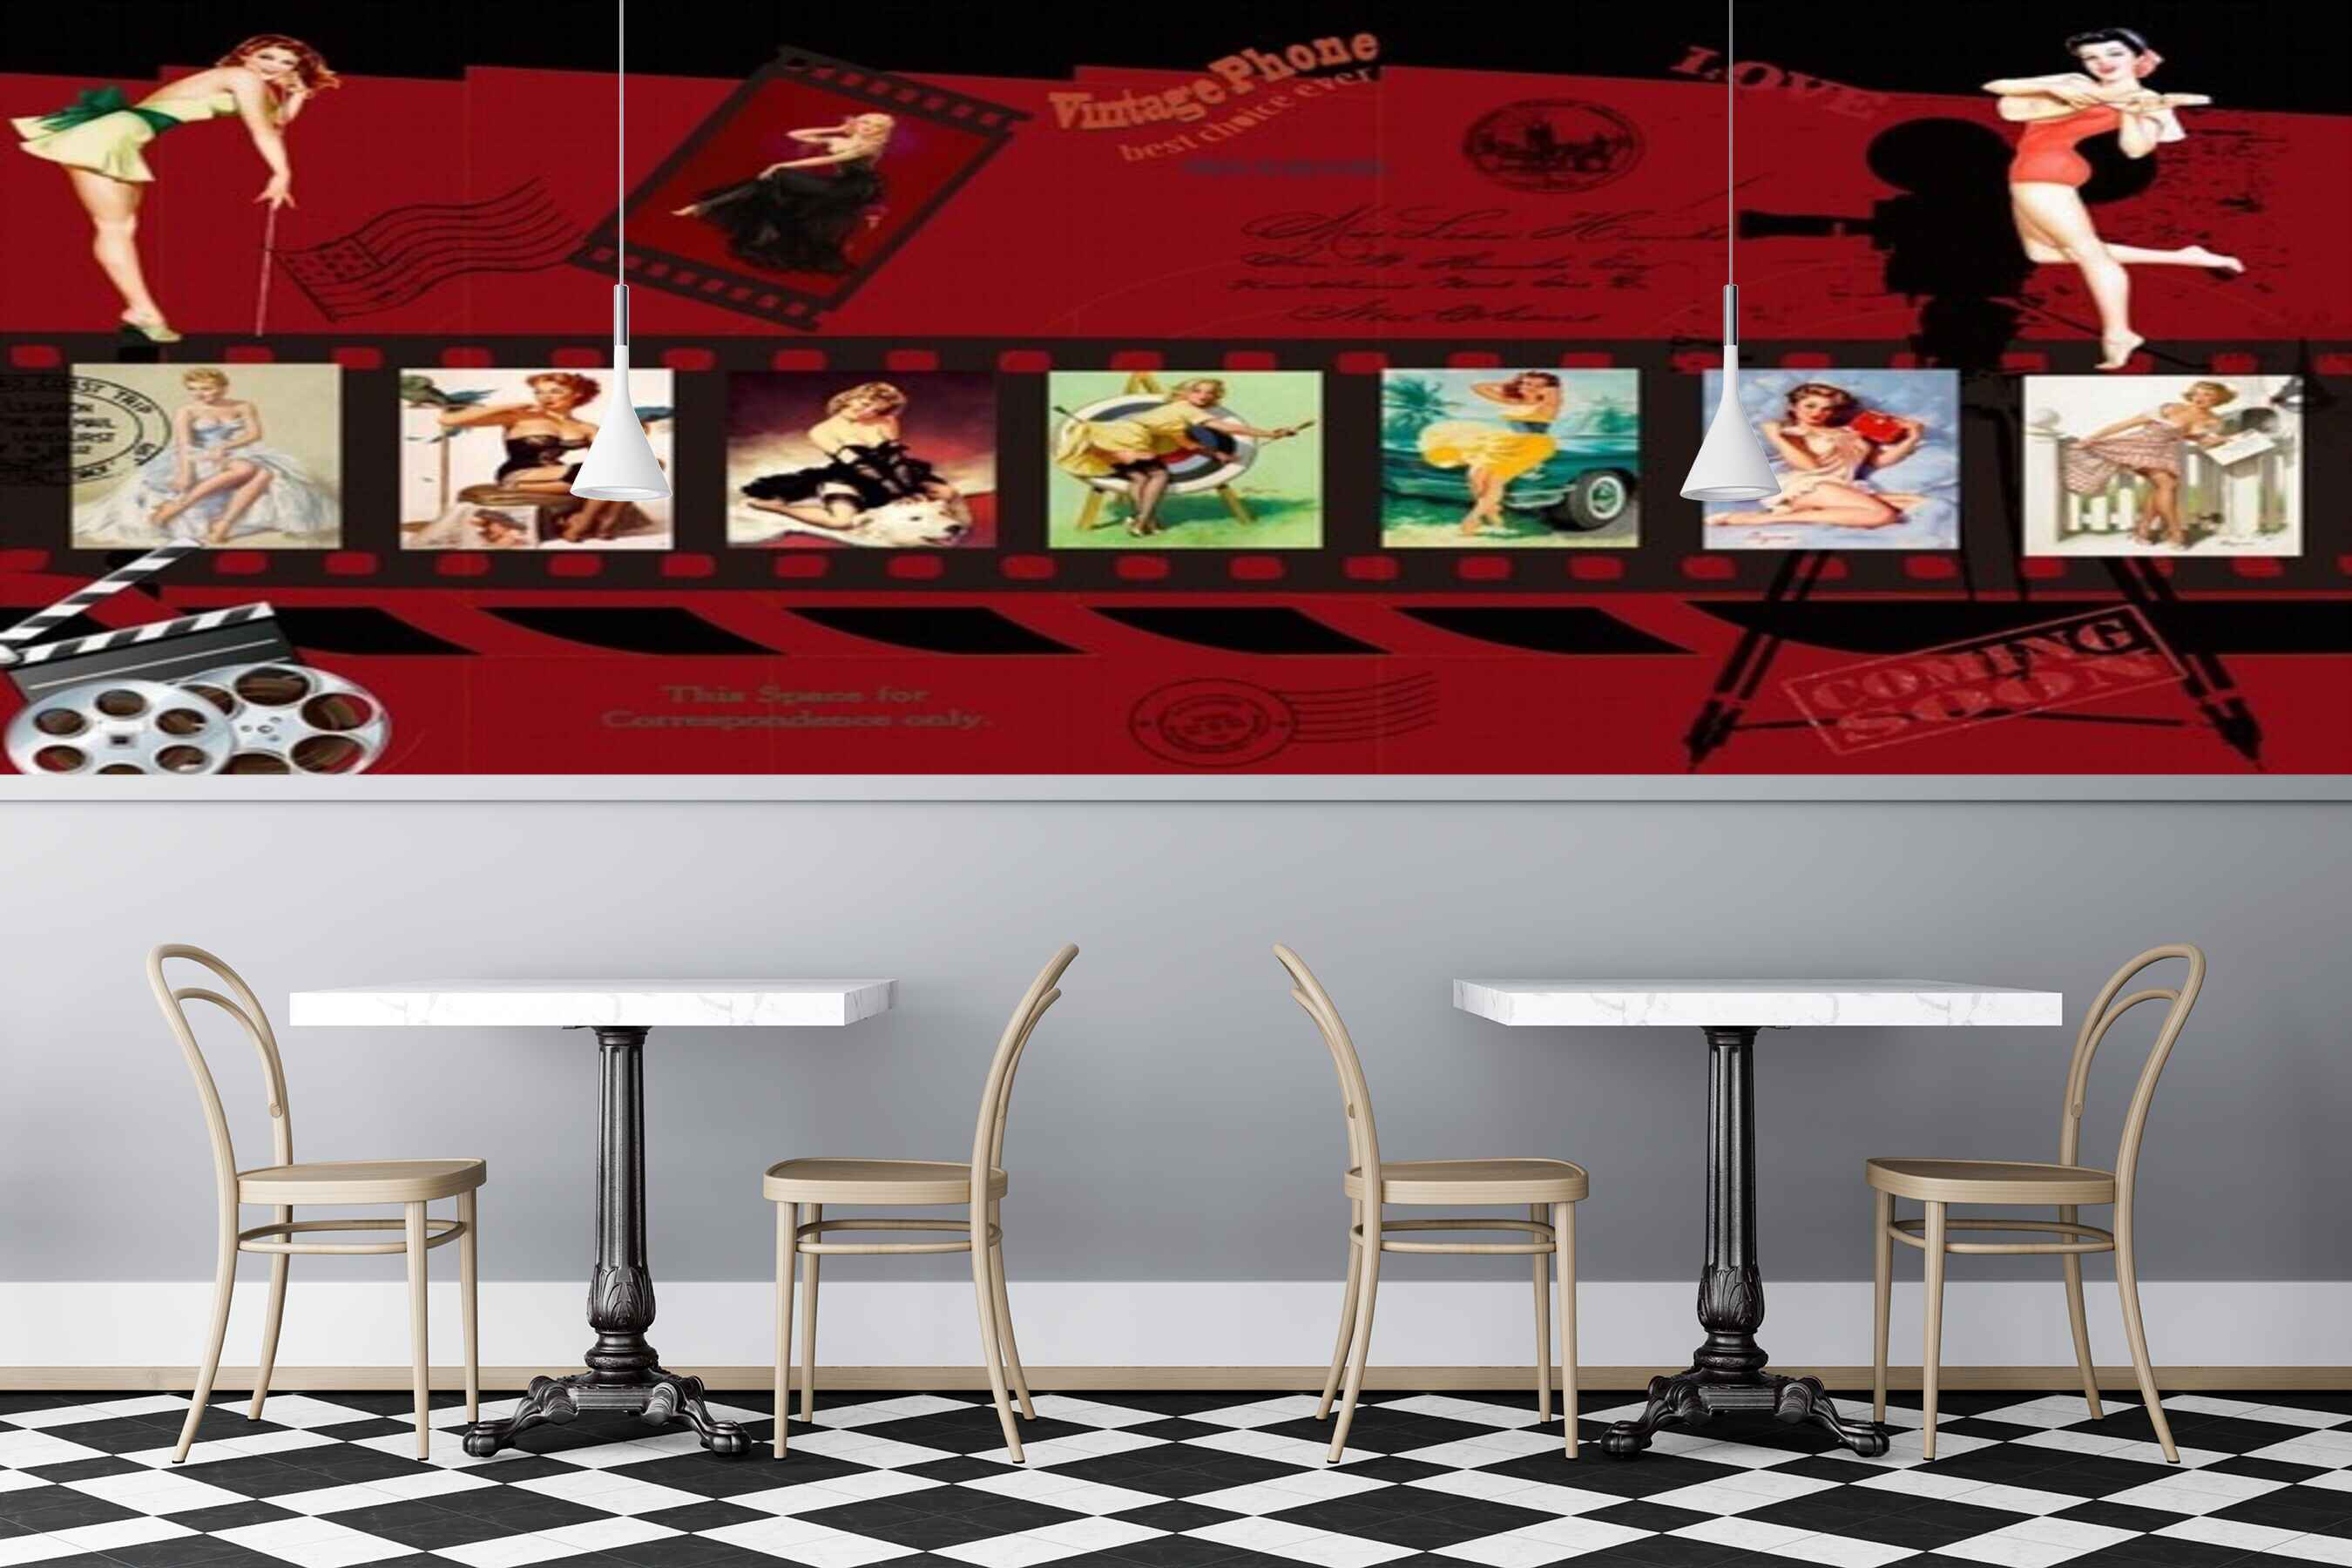 Avikalp MWZ3074 Reels Barbies Vintage Phone HD Wallpaper for Cafe Restaurant